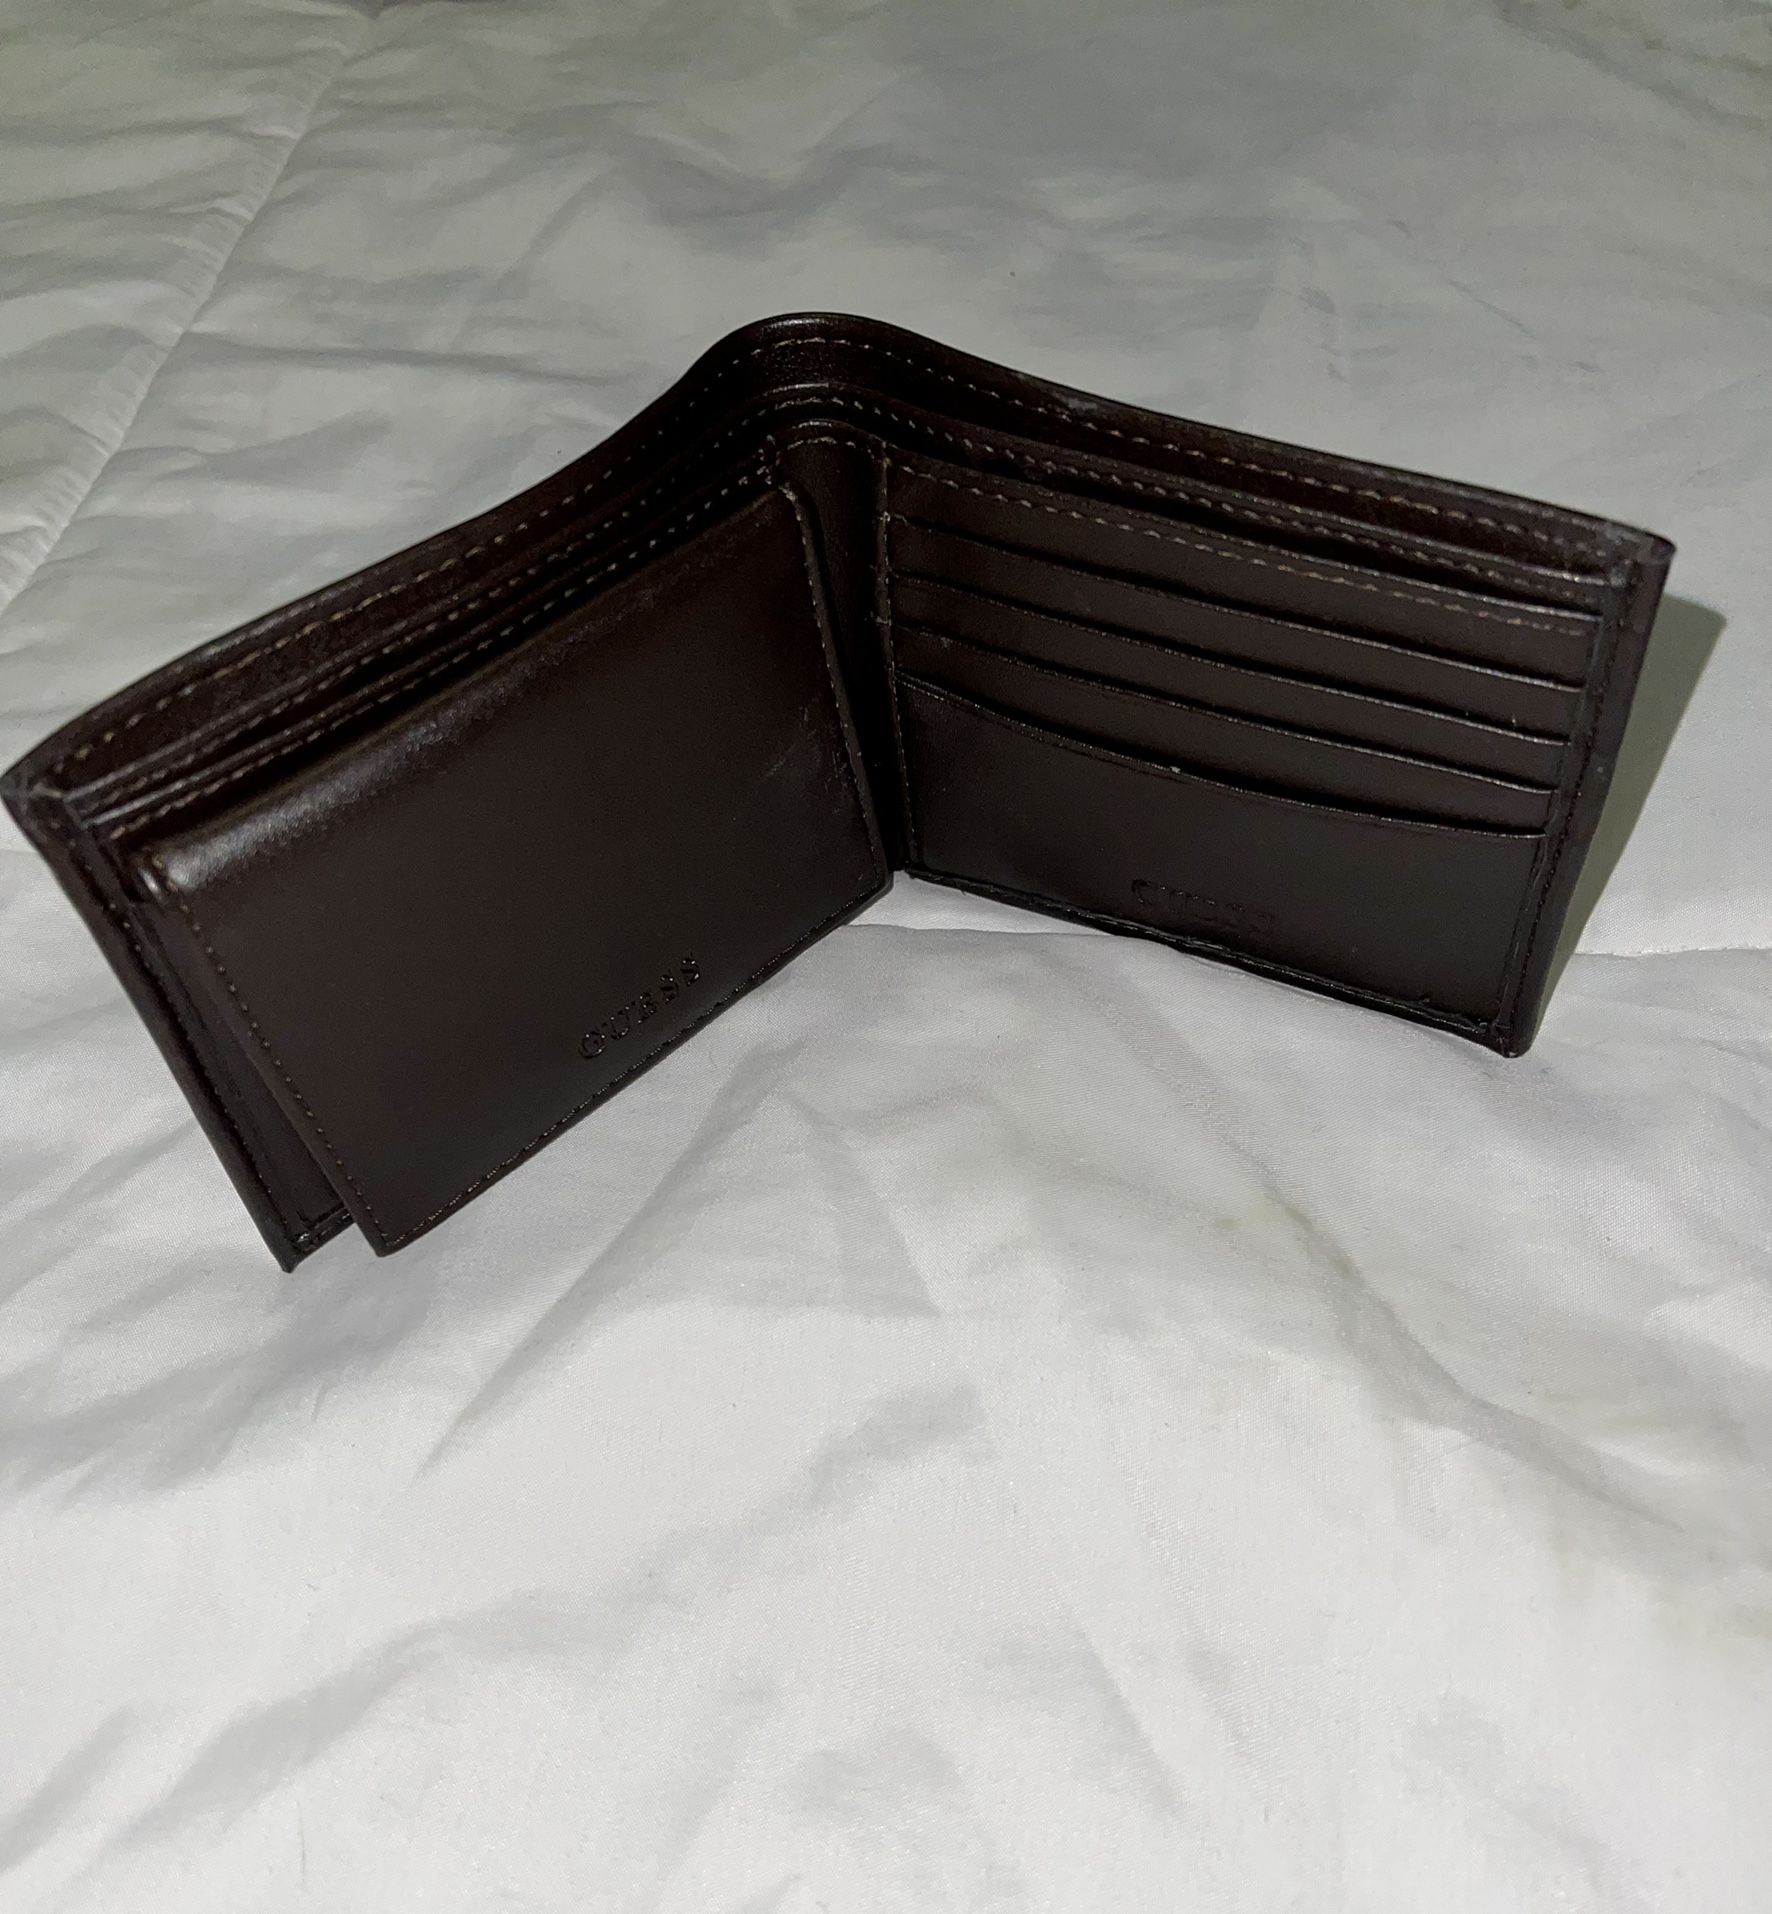 GUESS Mens’ Wallet: PASSCASE BILLFOLD & KEYFOB Gift Boxed Set - Brown ...